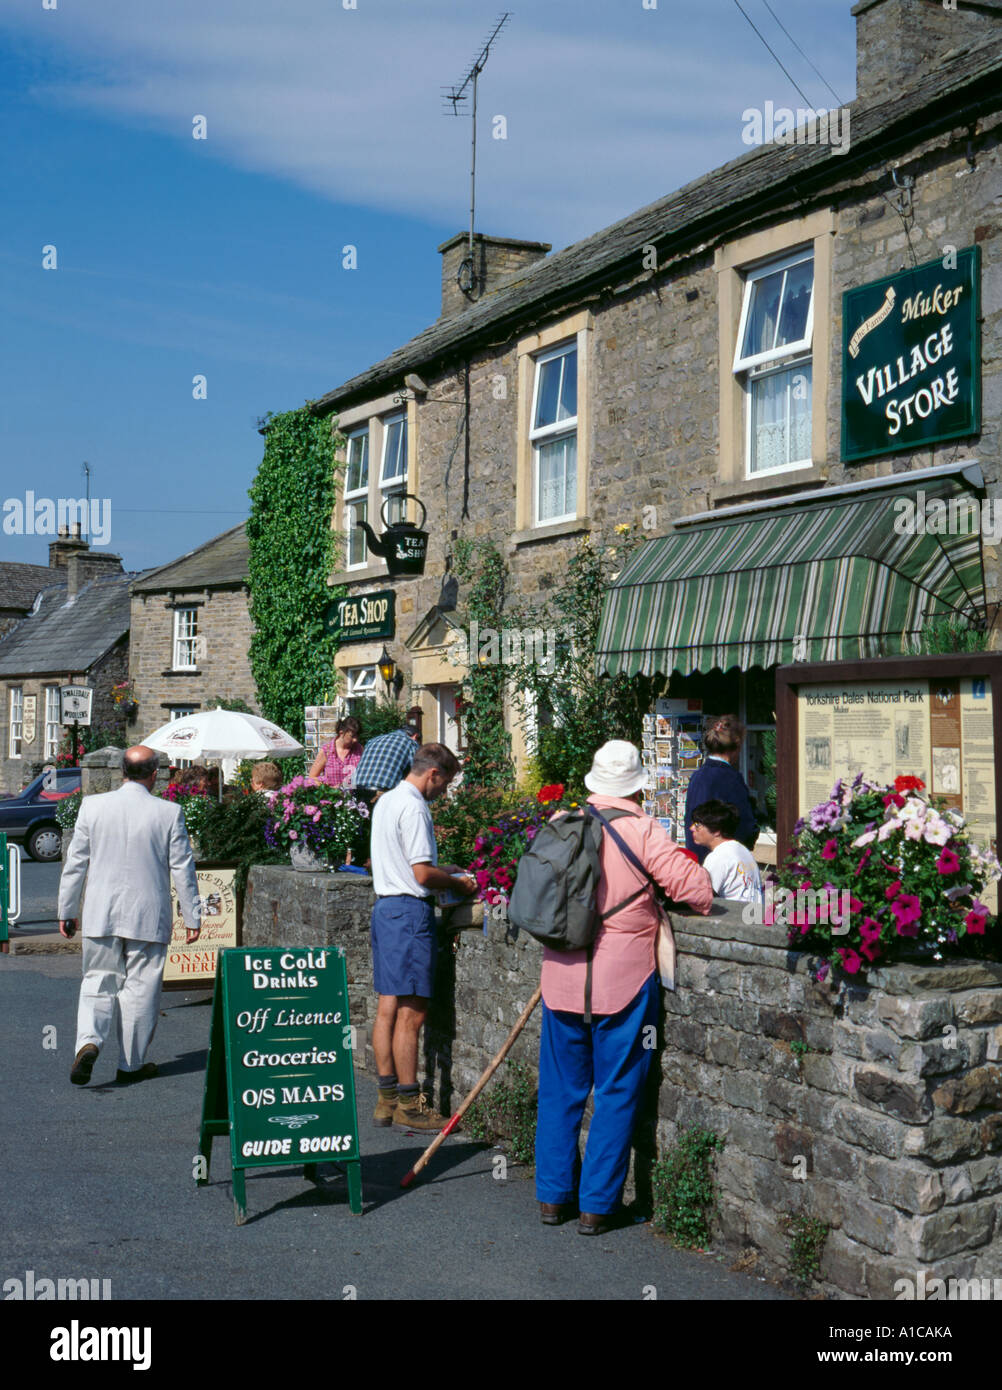 Tea Shop and Village Store, Muker, Upper Swaledale, Yorkshire Dales National Park, North Yorkshire, England, UK. Stock Photo